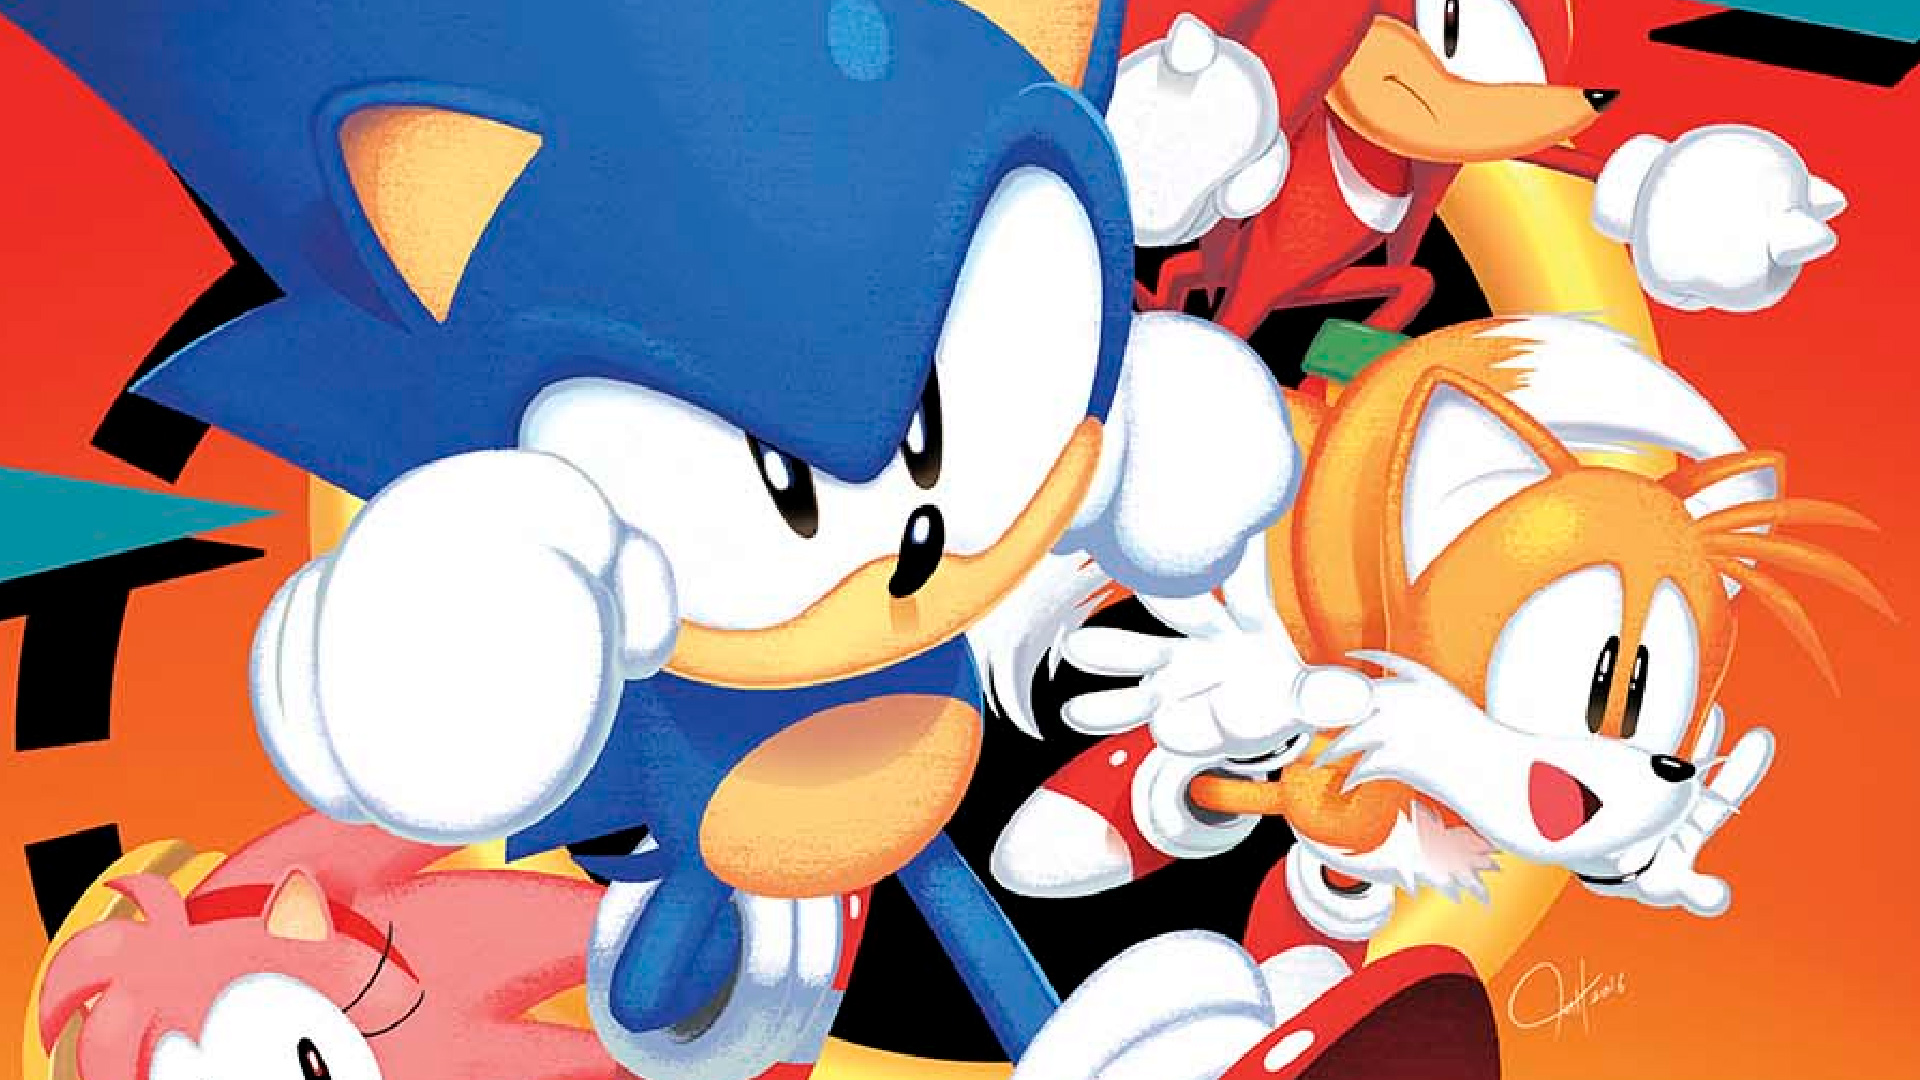 Sonic jp. Archie Sonic. Мега сониктв Соник Мания. Sonic Archie Comics. Sonic and Tails комикс Archie.